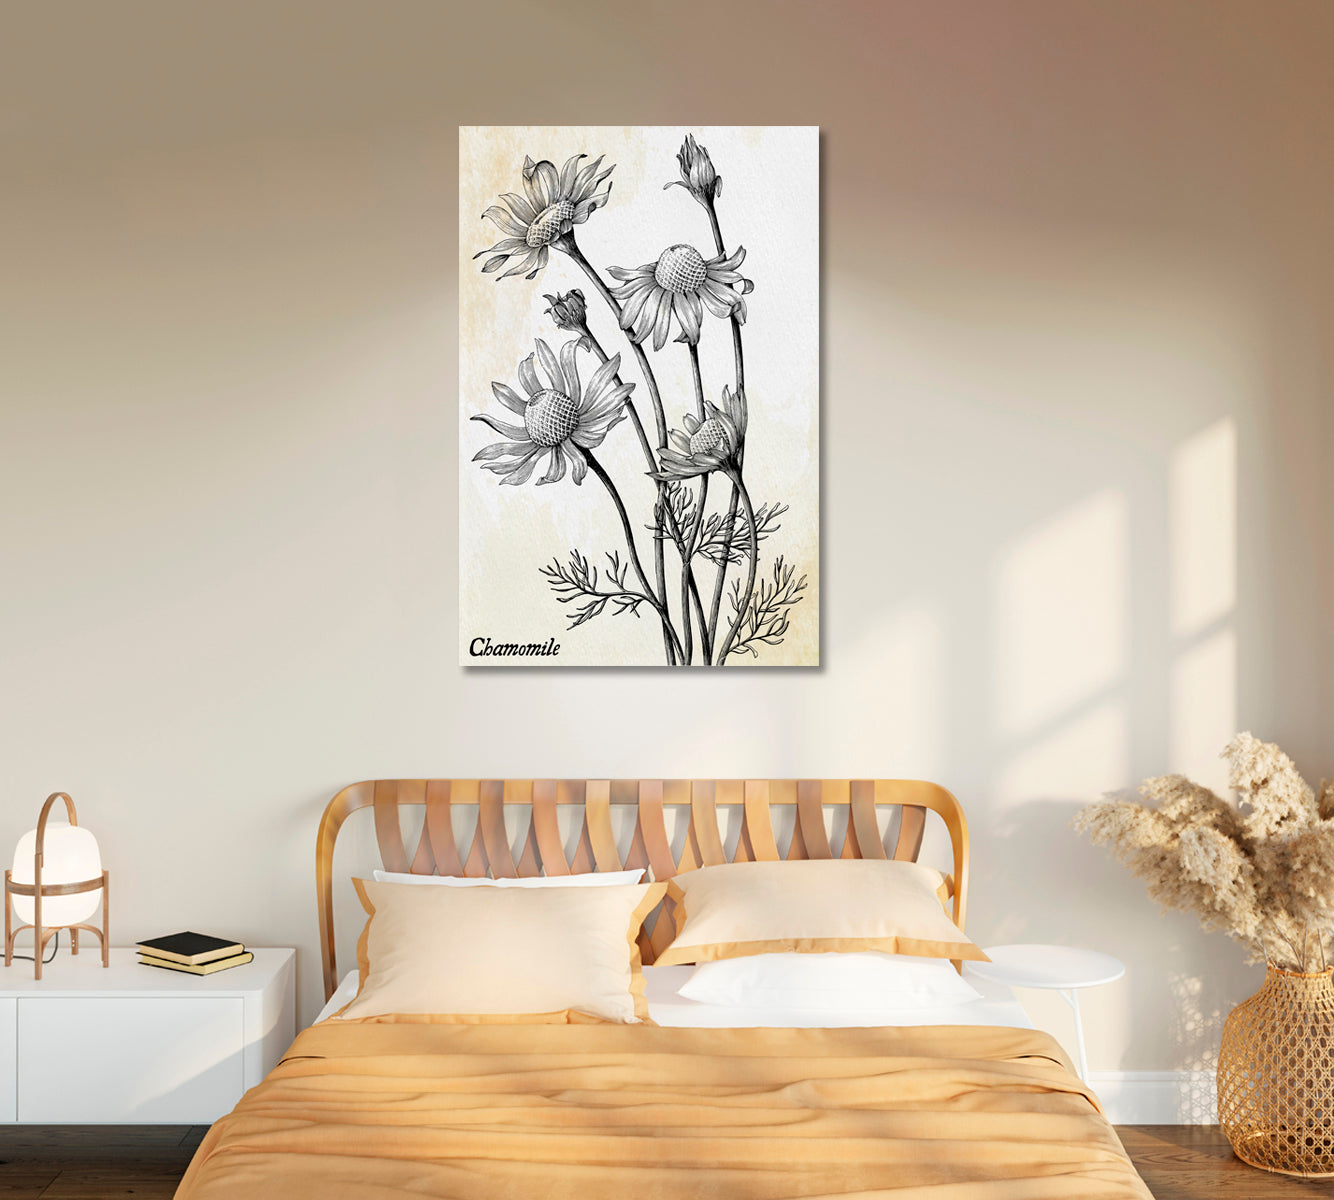 Chamomile Flowers Vintage Wall Art Decor-Canvas Print-CetArt-1 panel-16x24 inches-CetArt